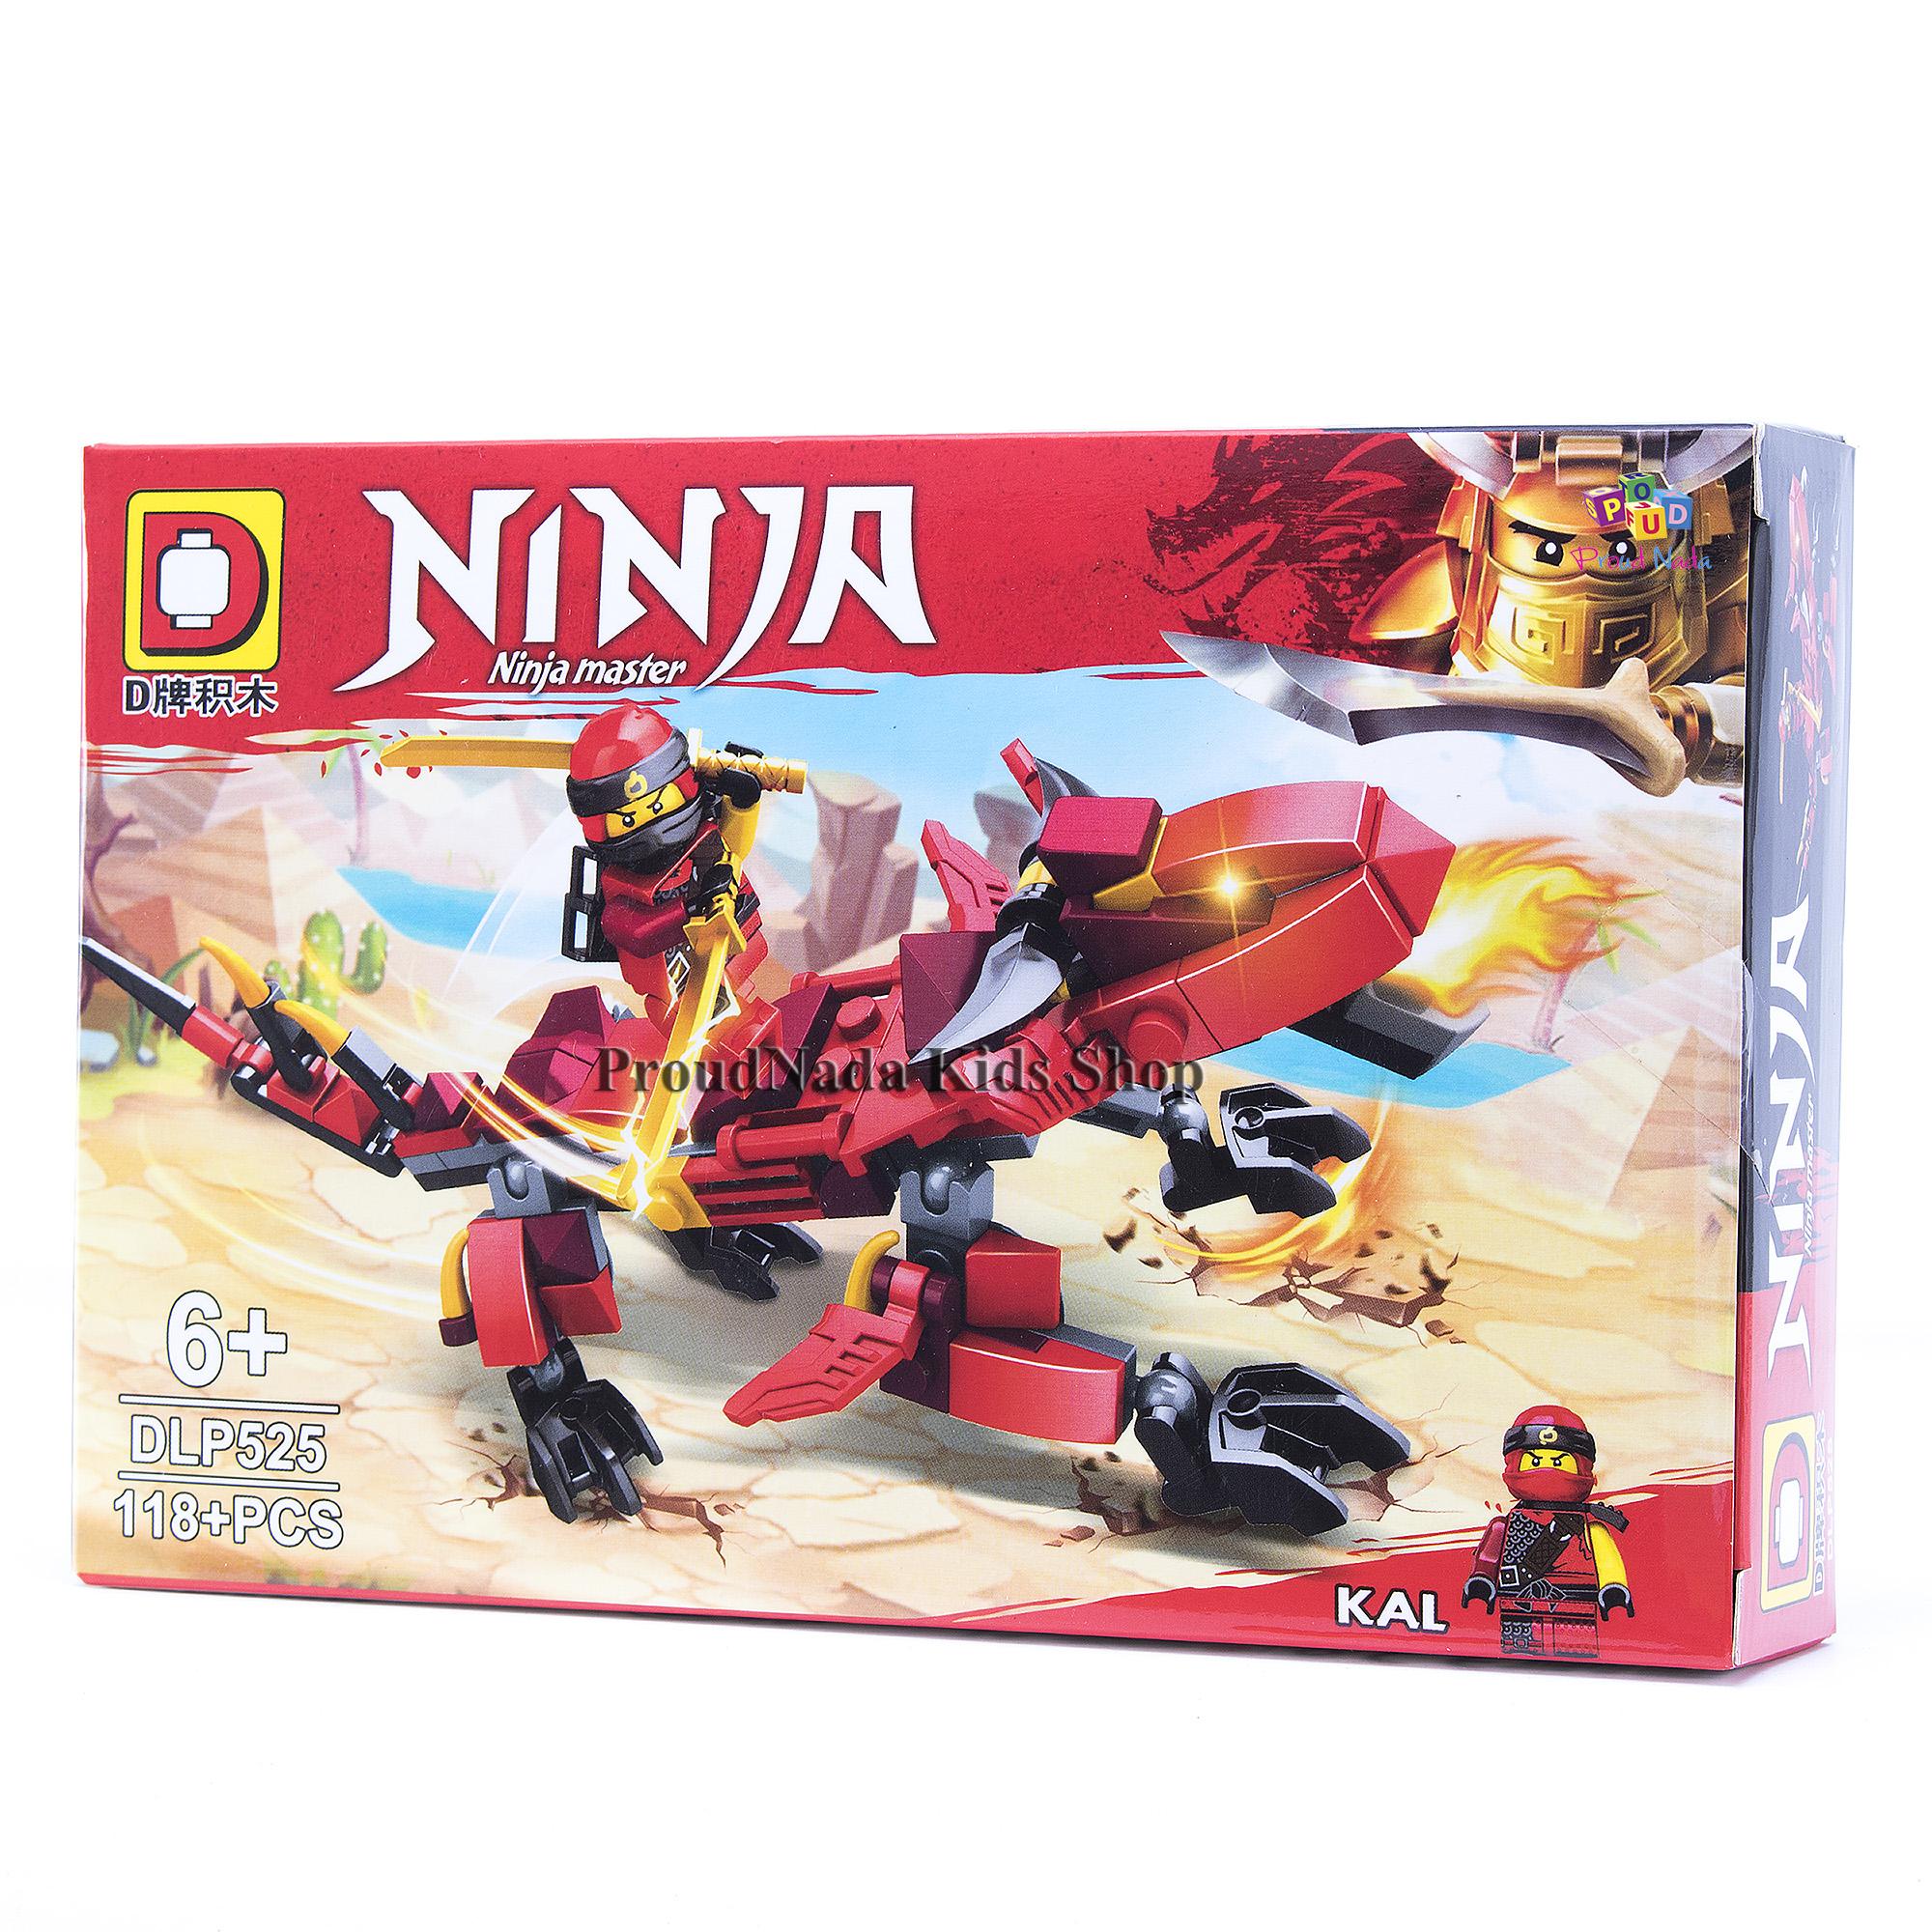 ProudNada Toys ของเล่นเด็กชุดตัวต่อเลโก้นินจามังกร DLP NINJA master DLP525 สี แดง